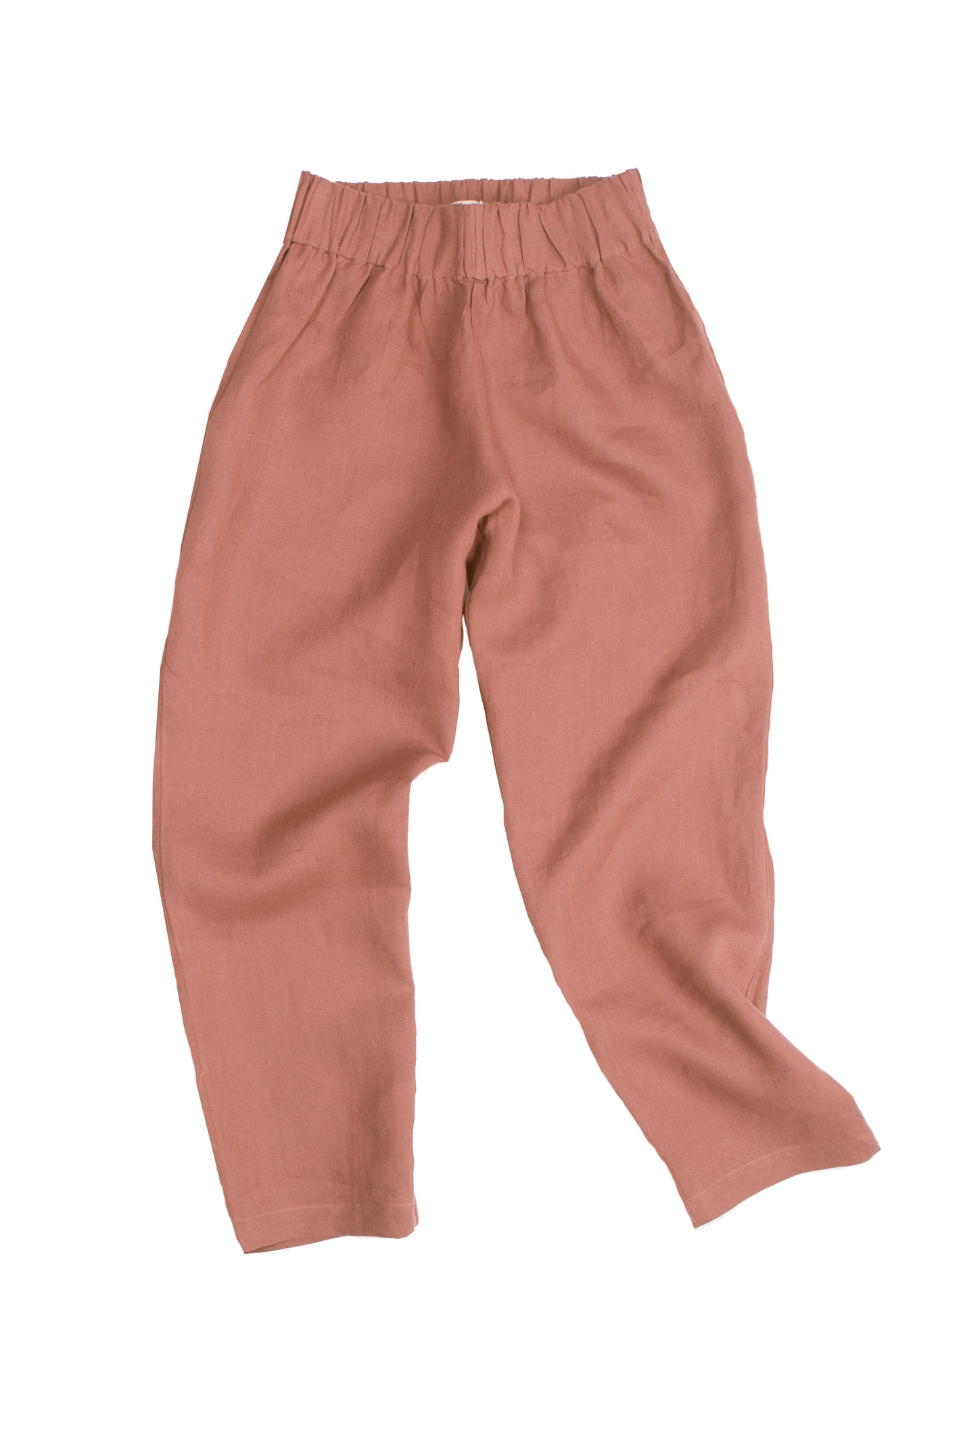 Puchi Pants Arabic SALE